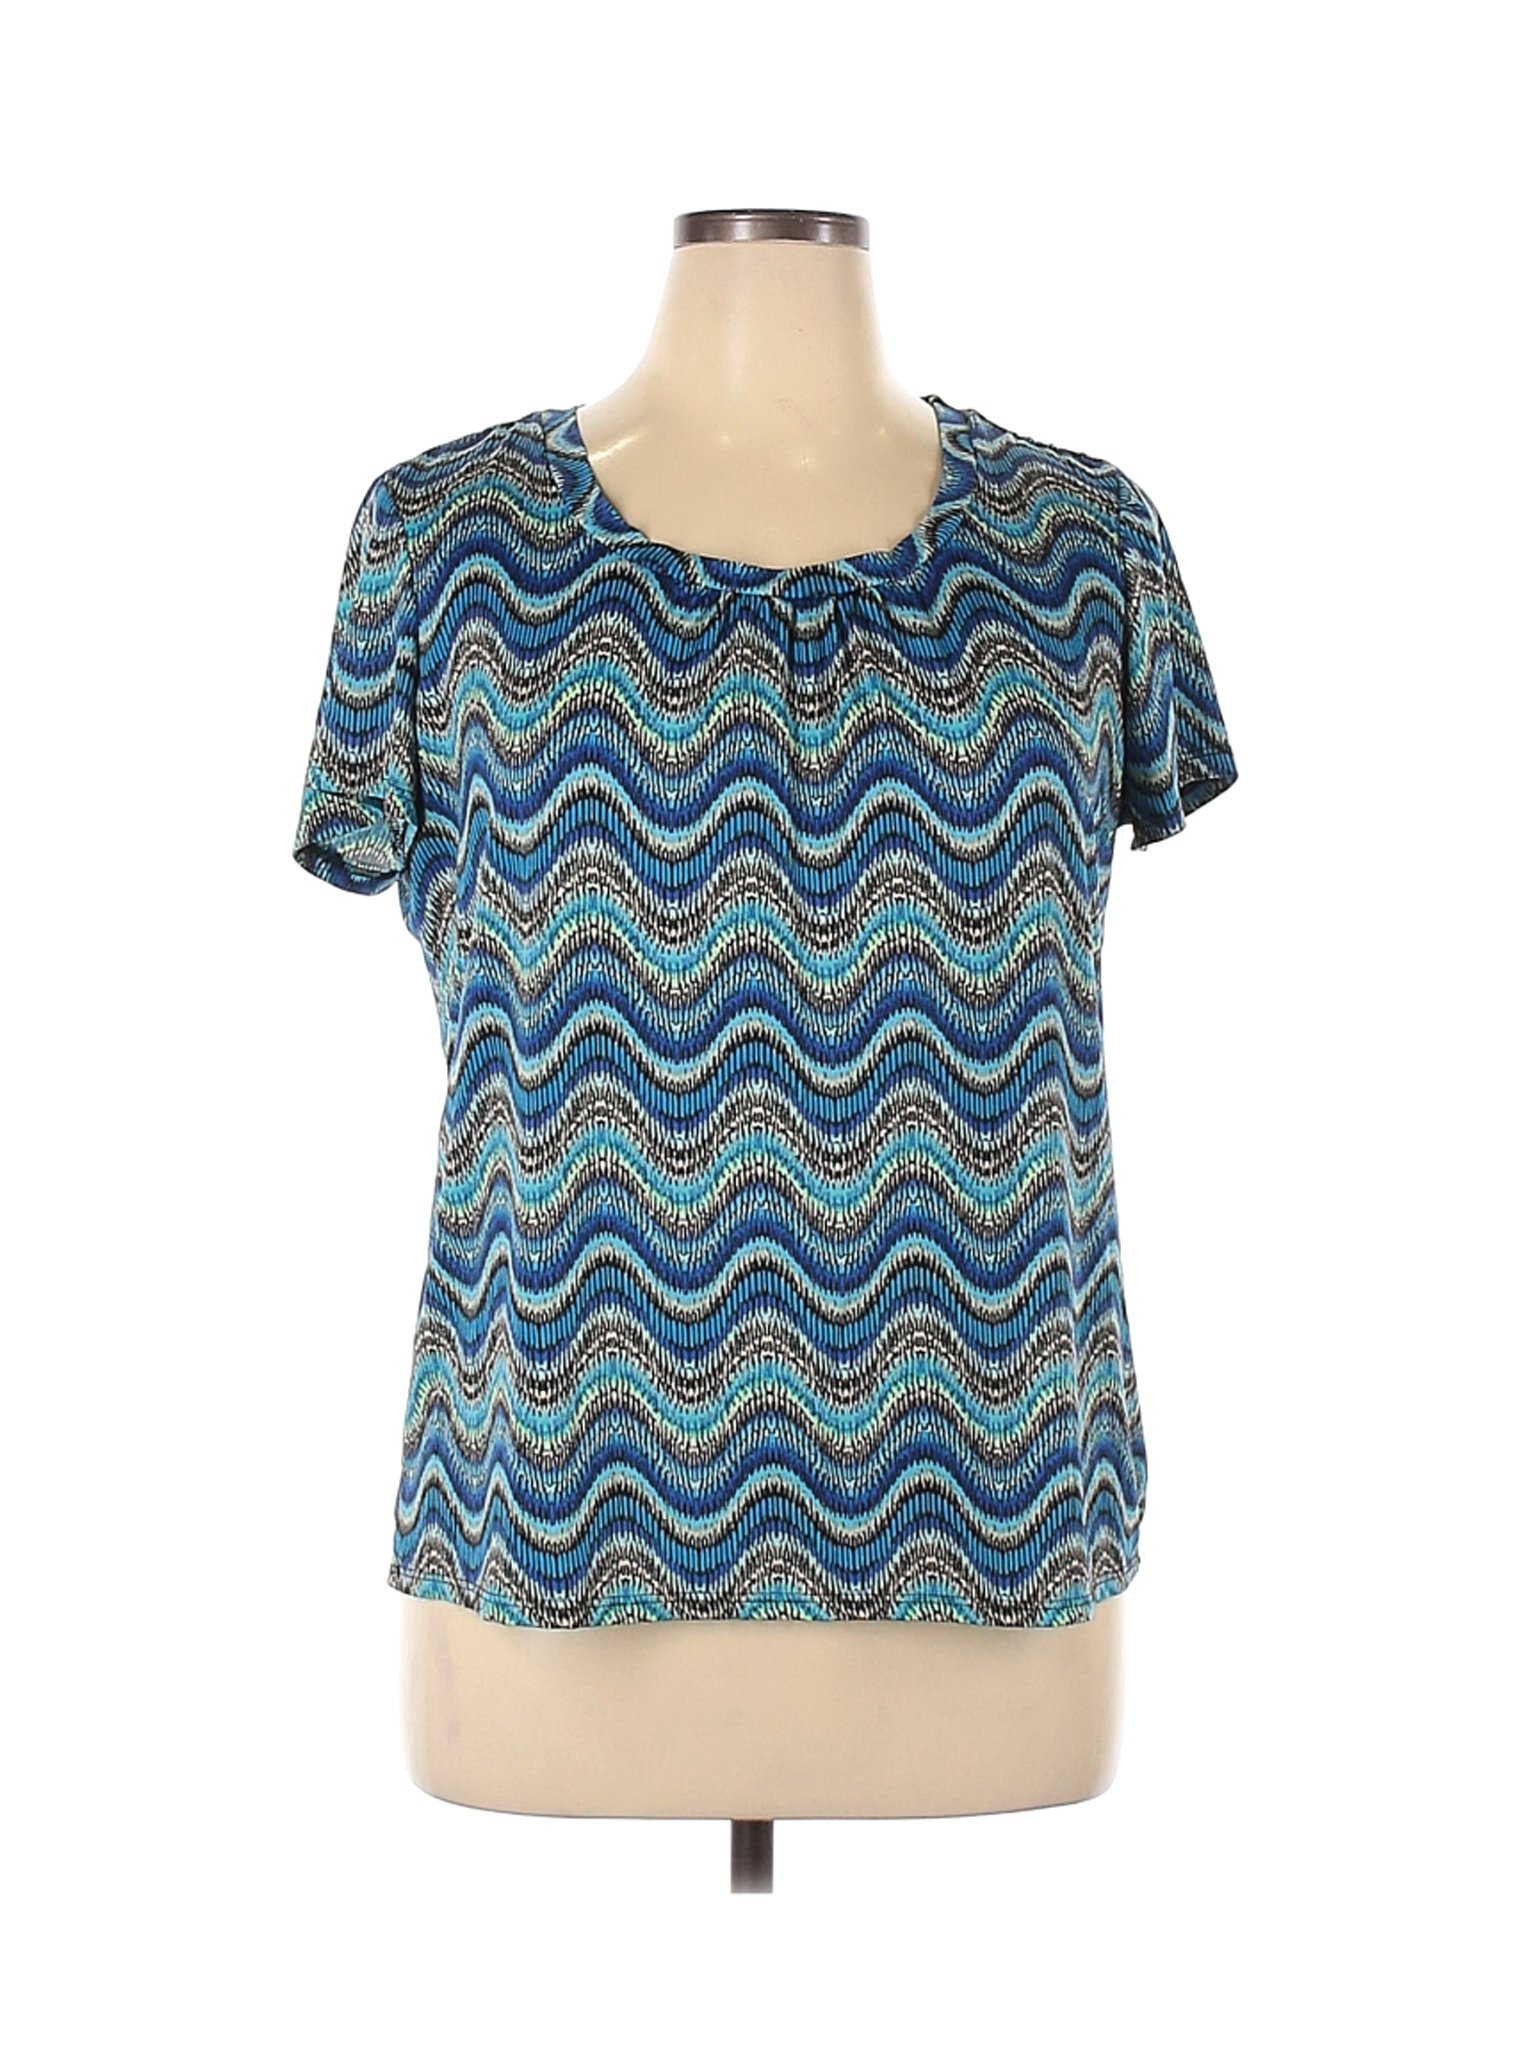 Studio Works Women Blue Short Sleeve Blouse XL | eBay